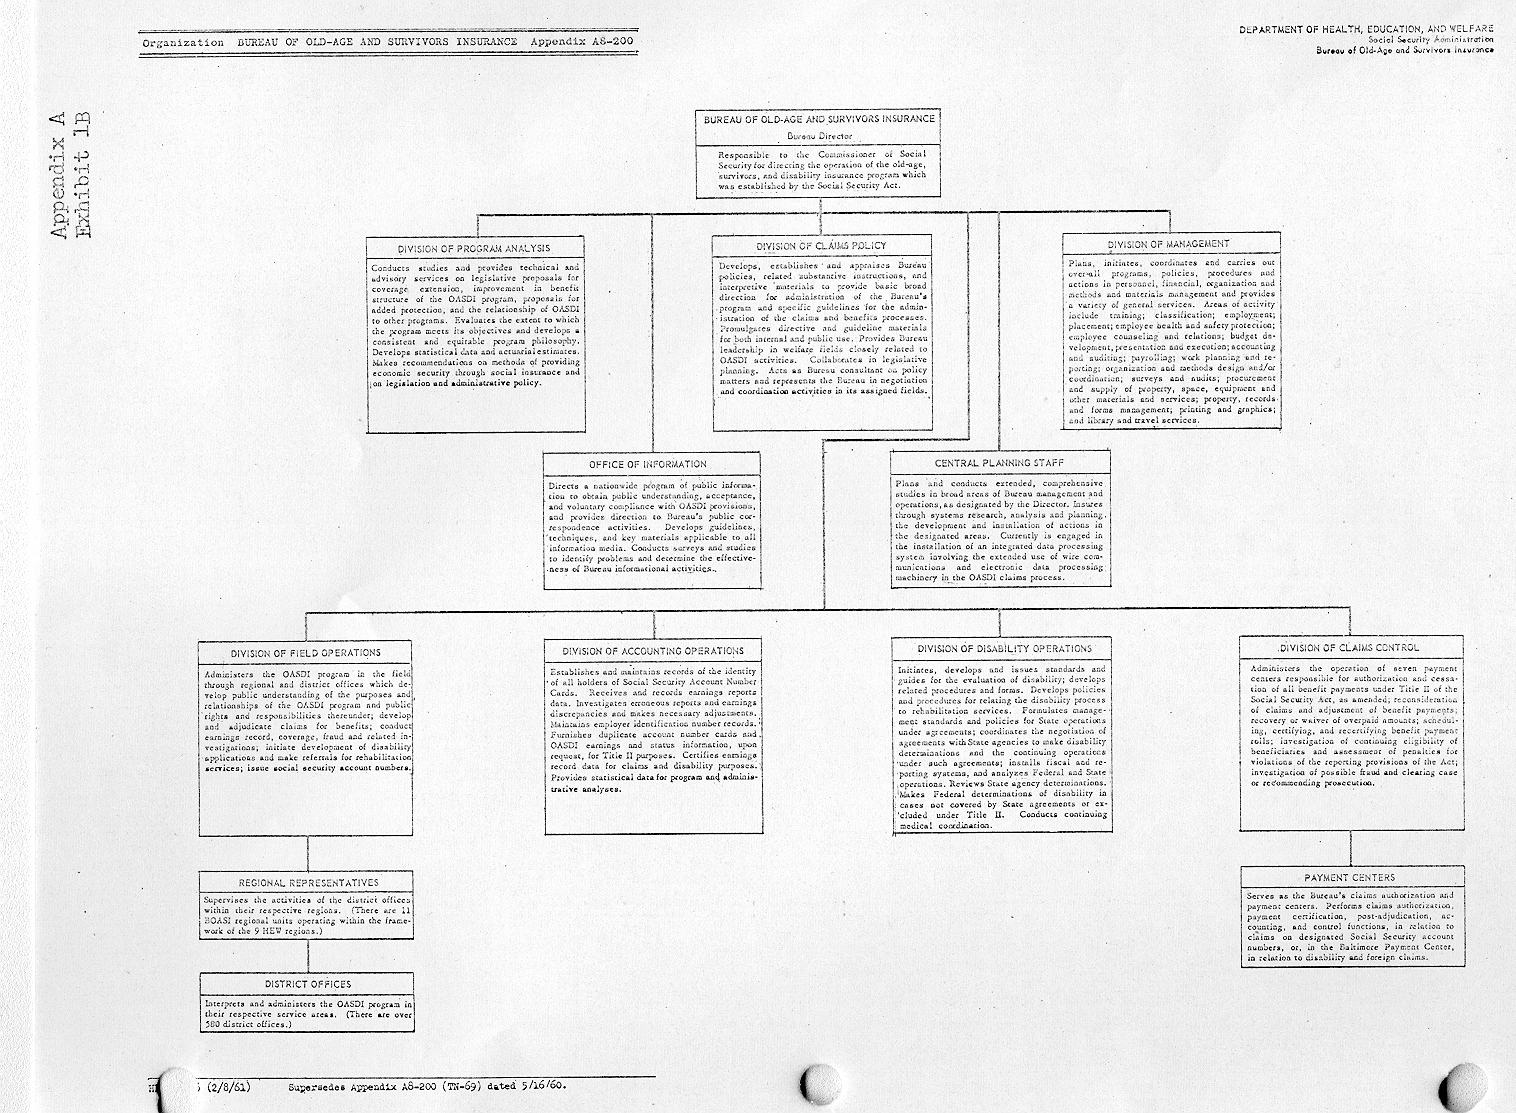 Bureau org chart 1961